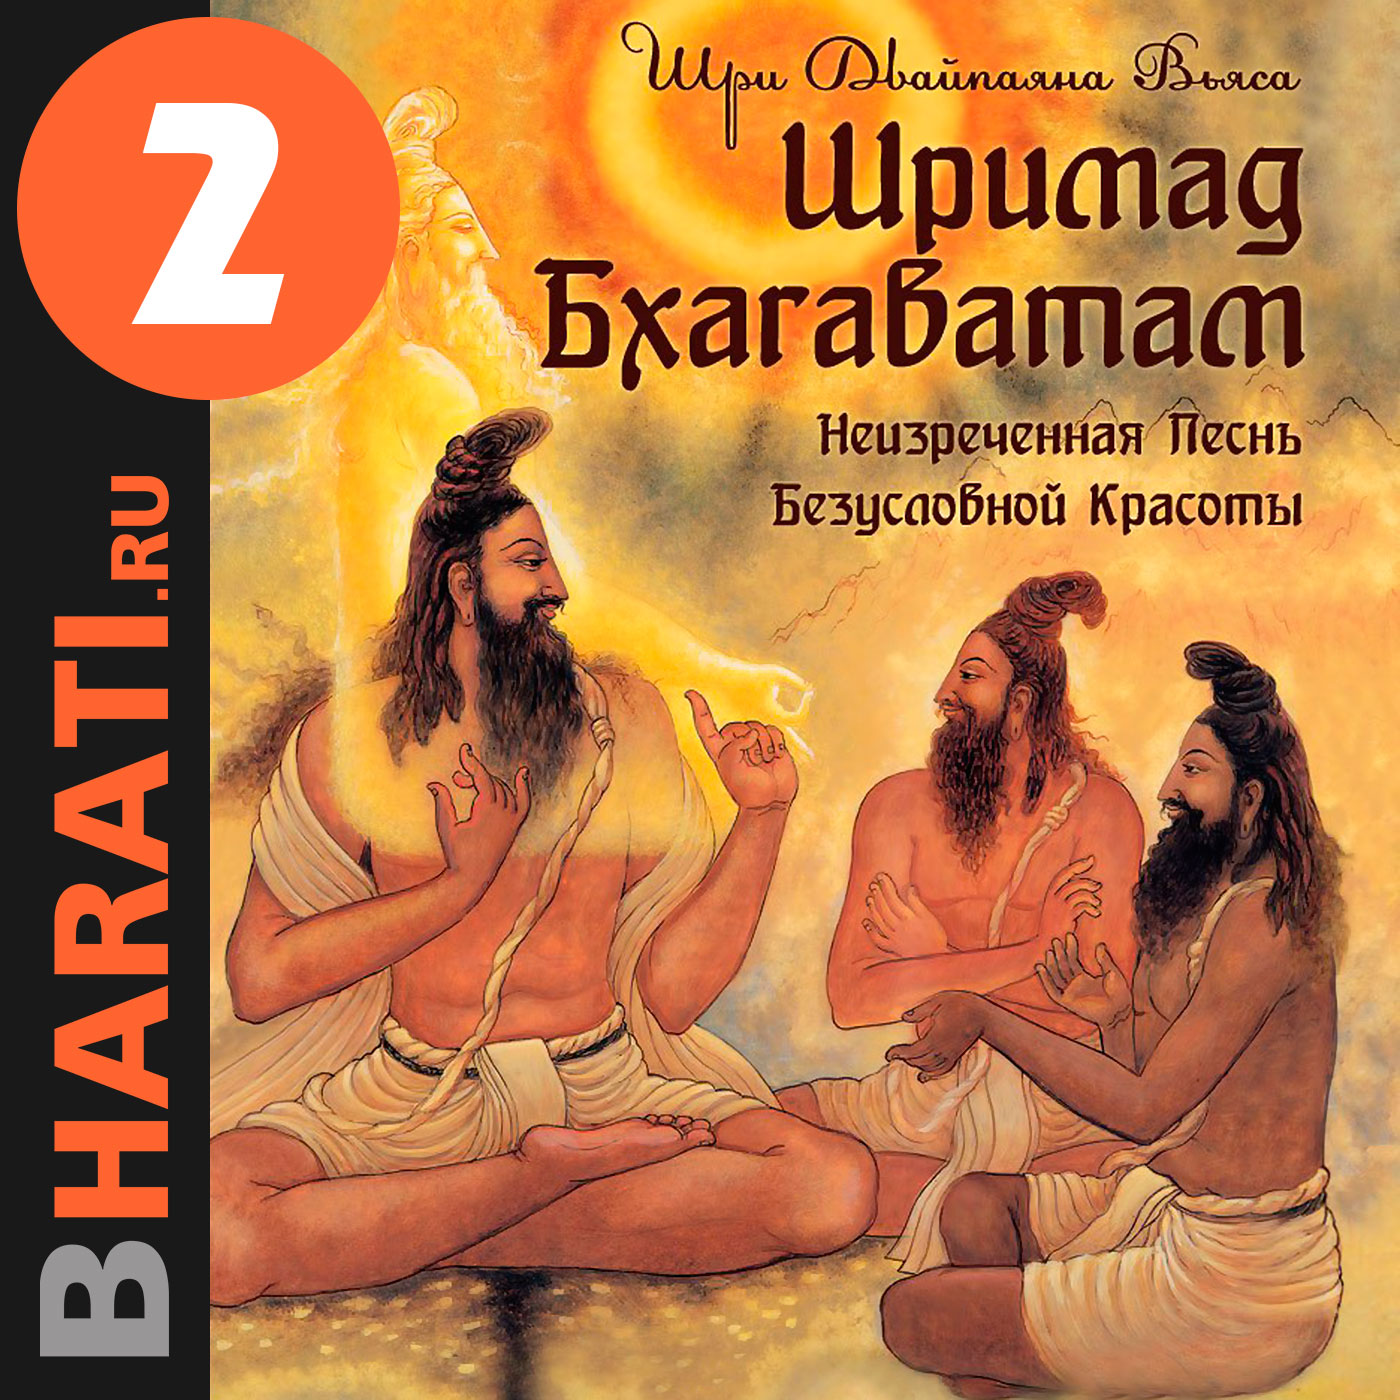 Аудиокнига "Шримад Бхагаватам". Книга 2: "Творение"